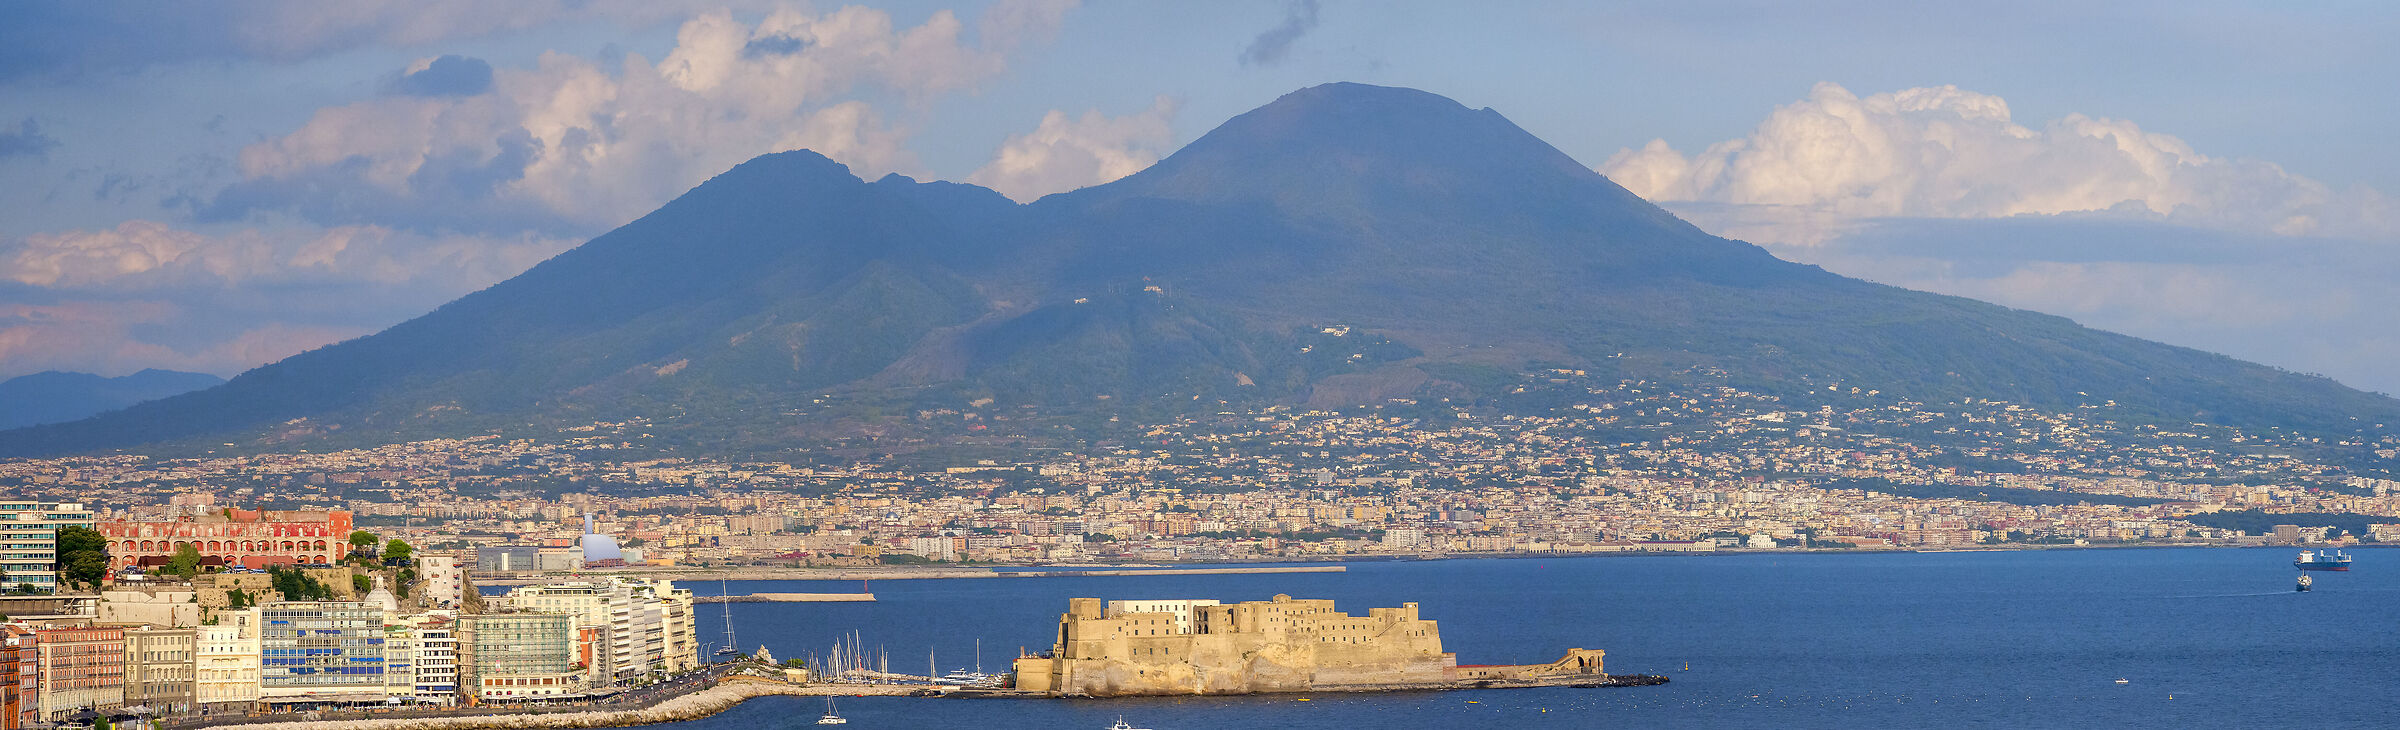 Napoli - Vista panoramica...